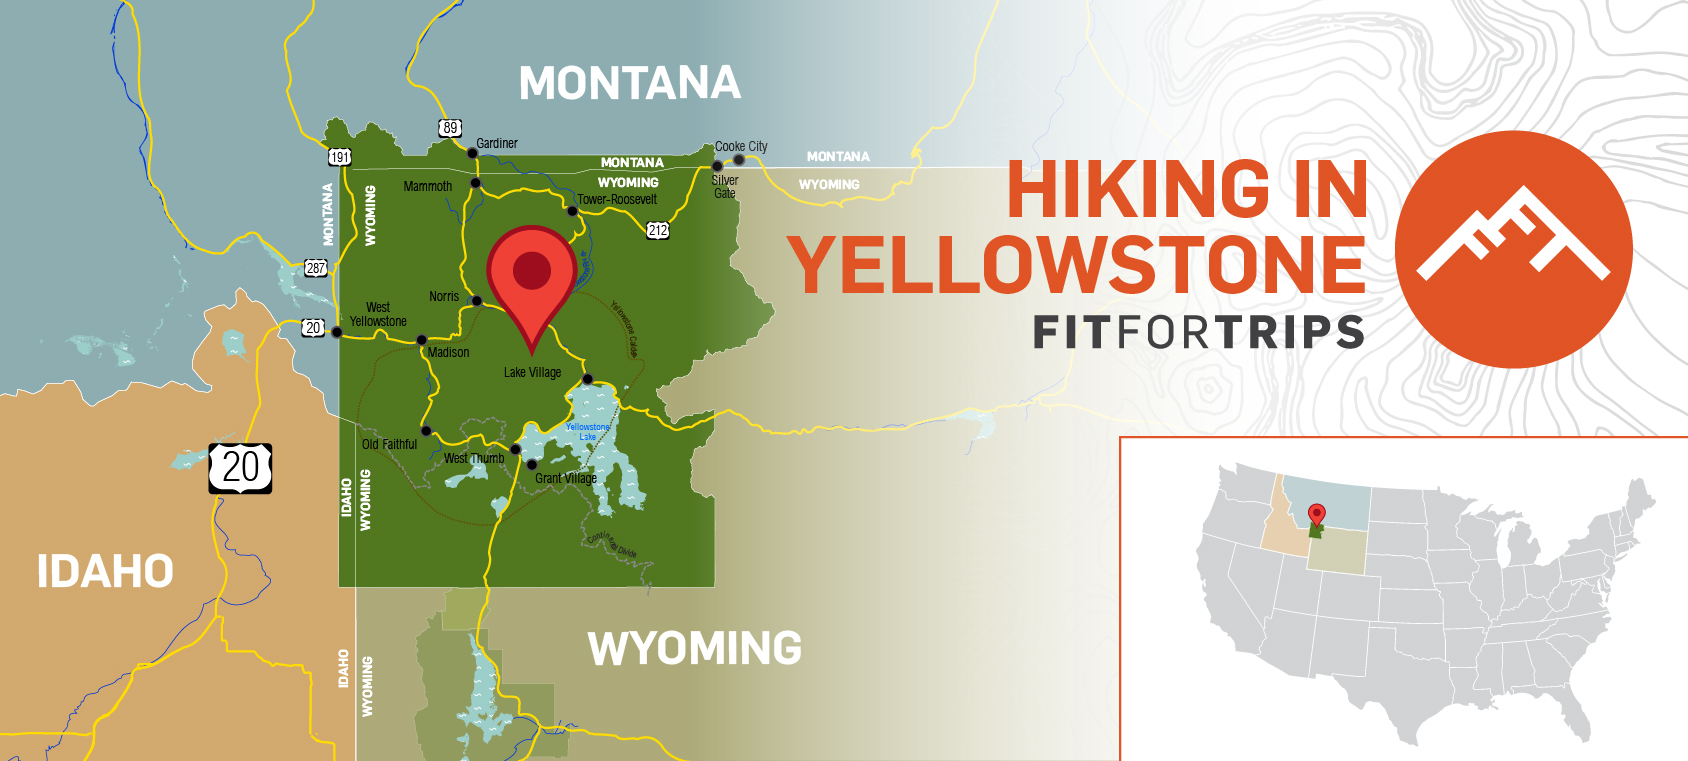 Yellowstone Lodging 101 - Yellowstone Forever